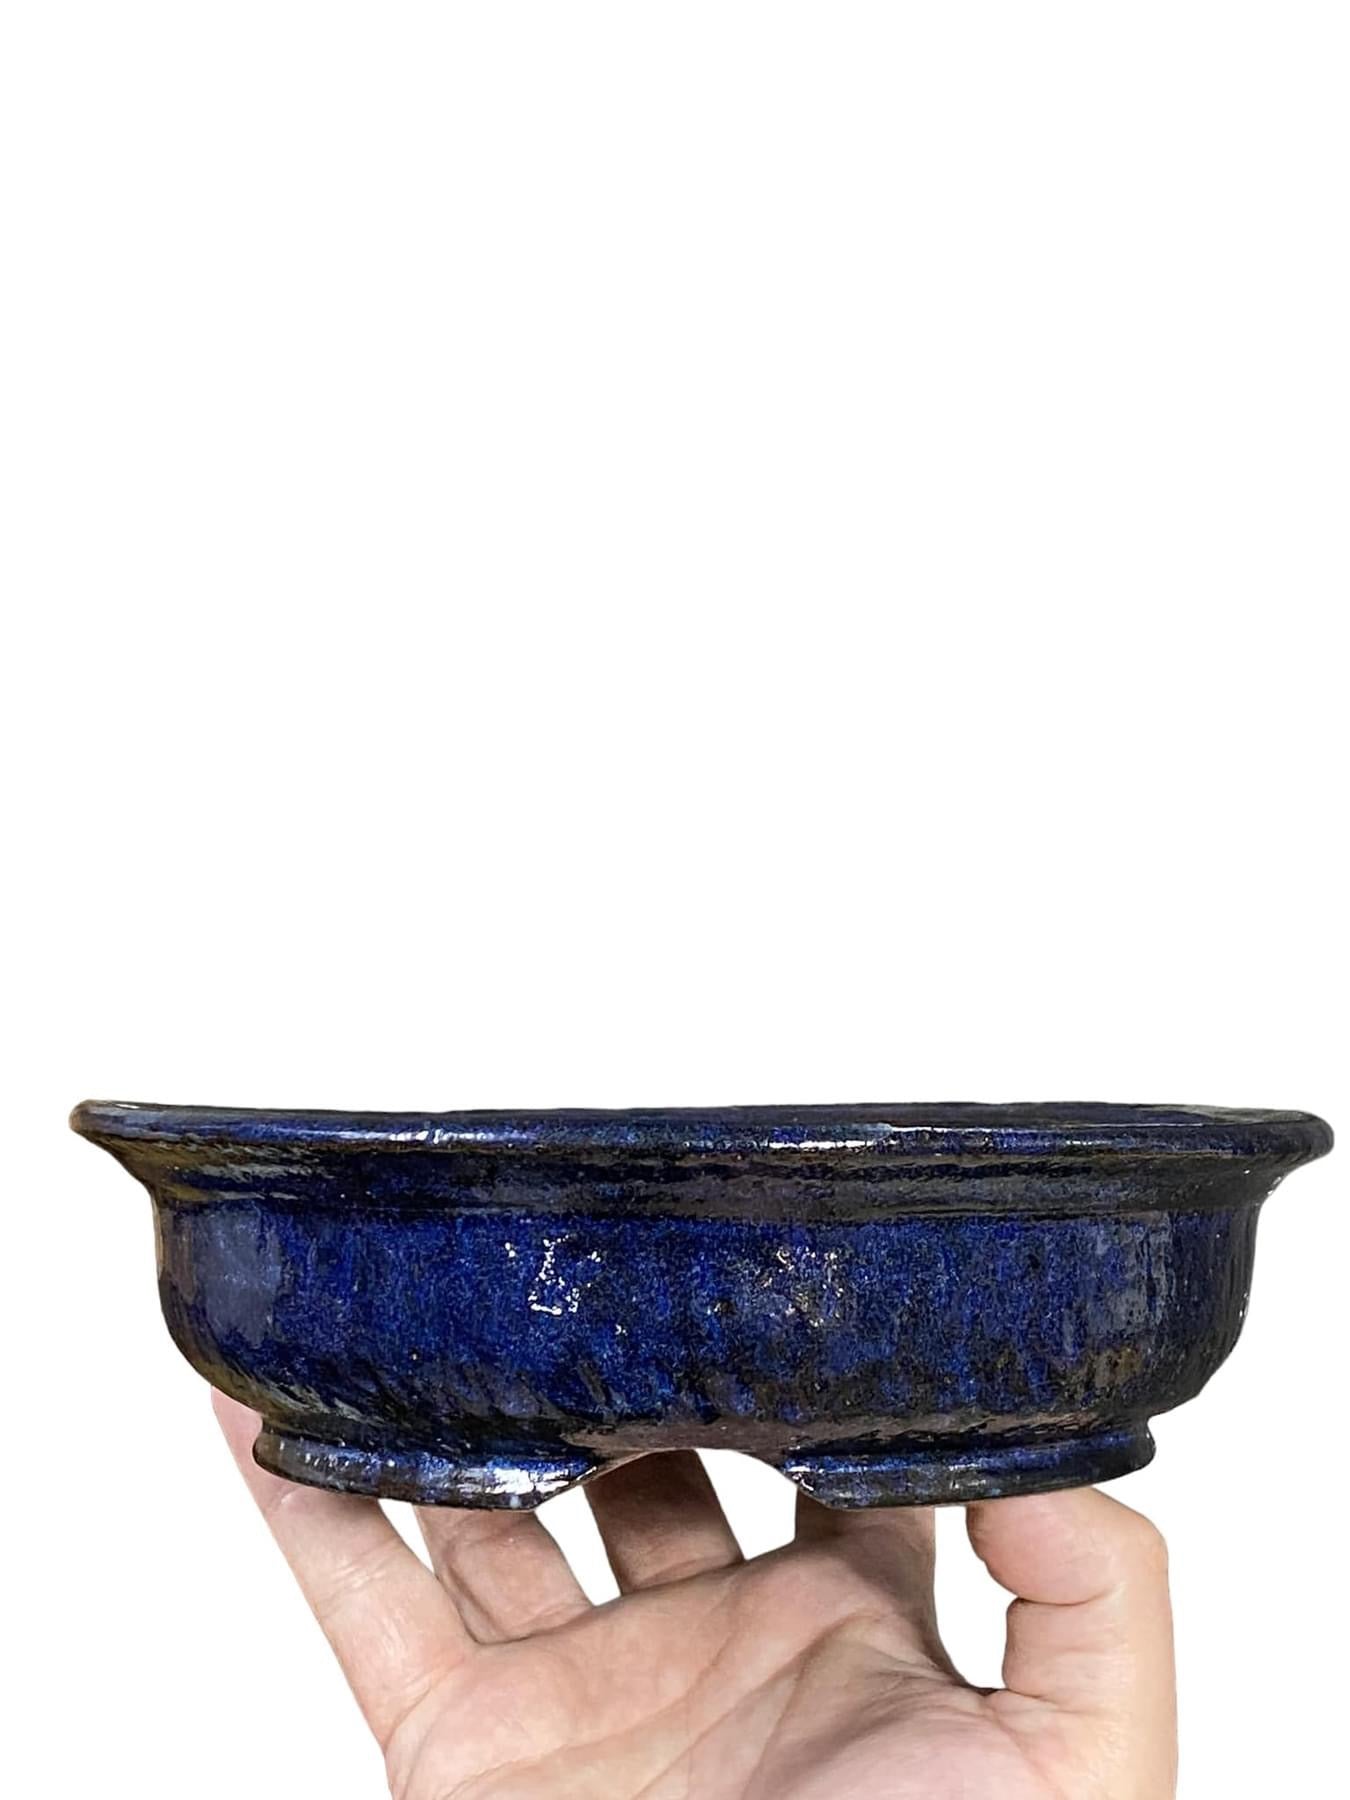 Shuho - Black and Blue Glazed Bowl Style Bonsai Pot